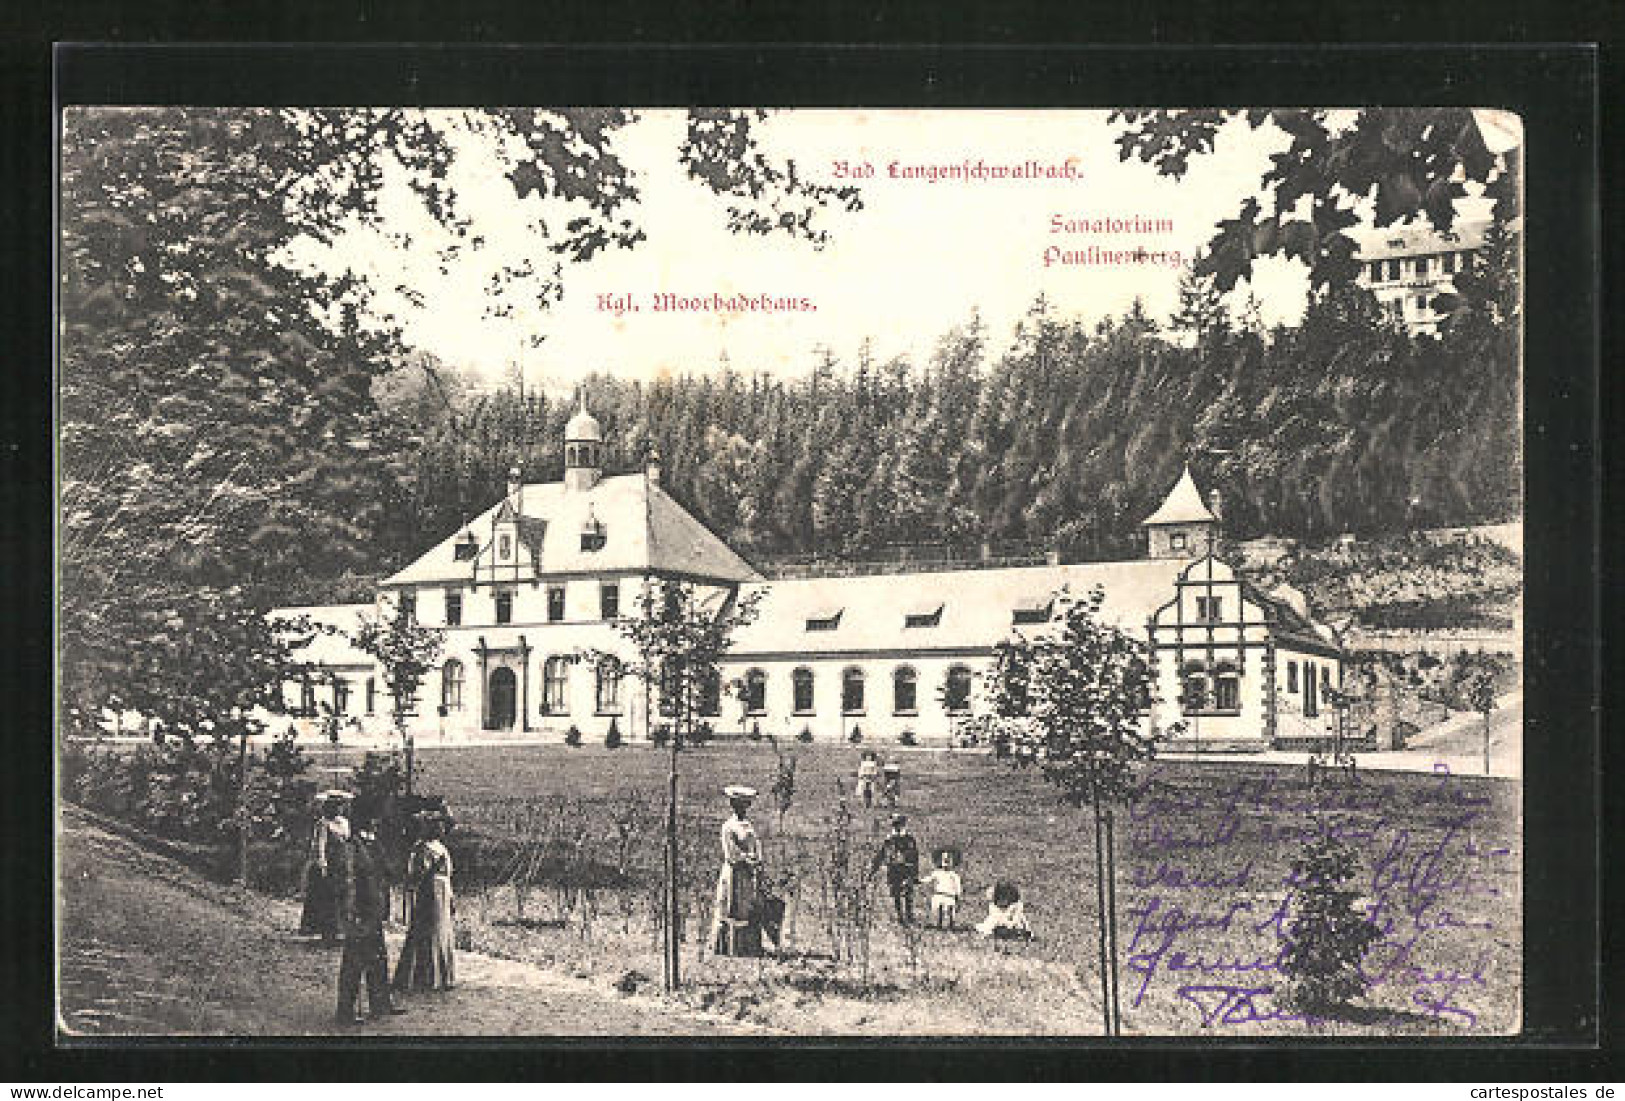 AK Bad Langenschwalbach, Kgl. Moorbadehaus, Sanatoirum Paulinenberg  - Langen